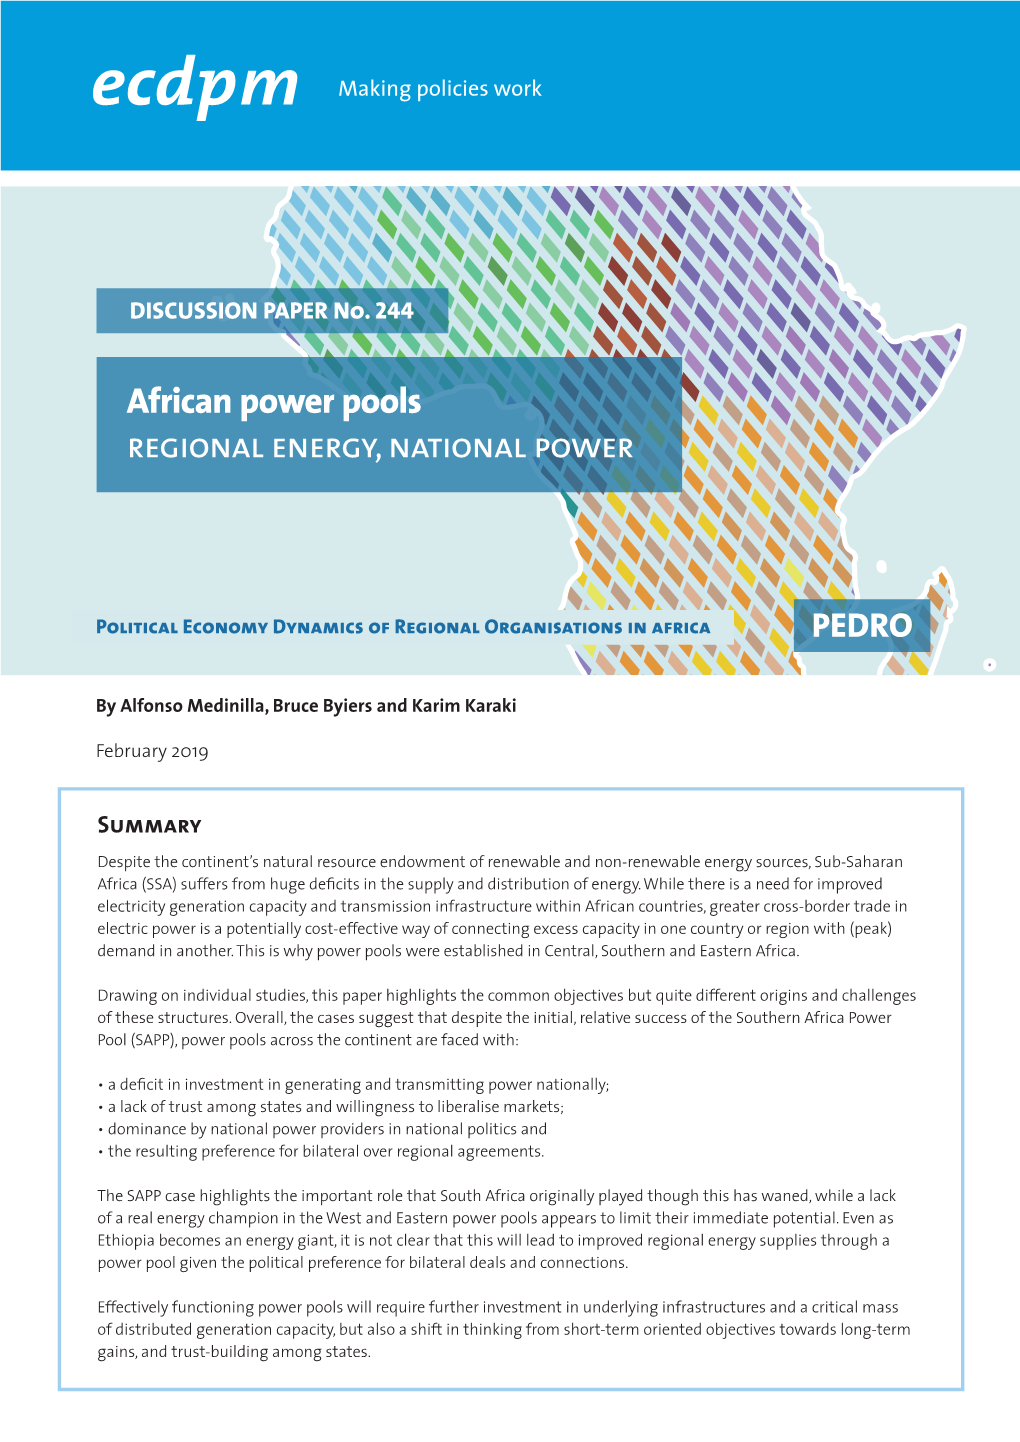 African Power Pools Regional Energy, National Power